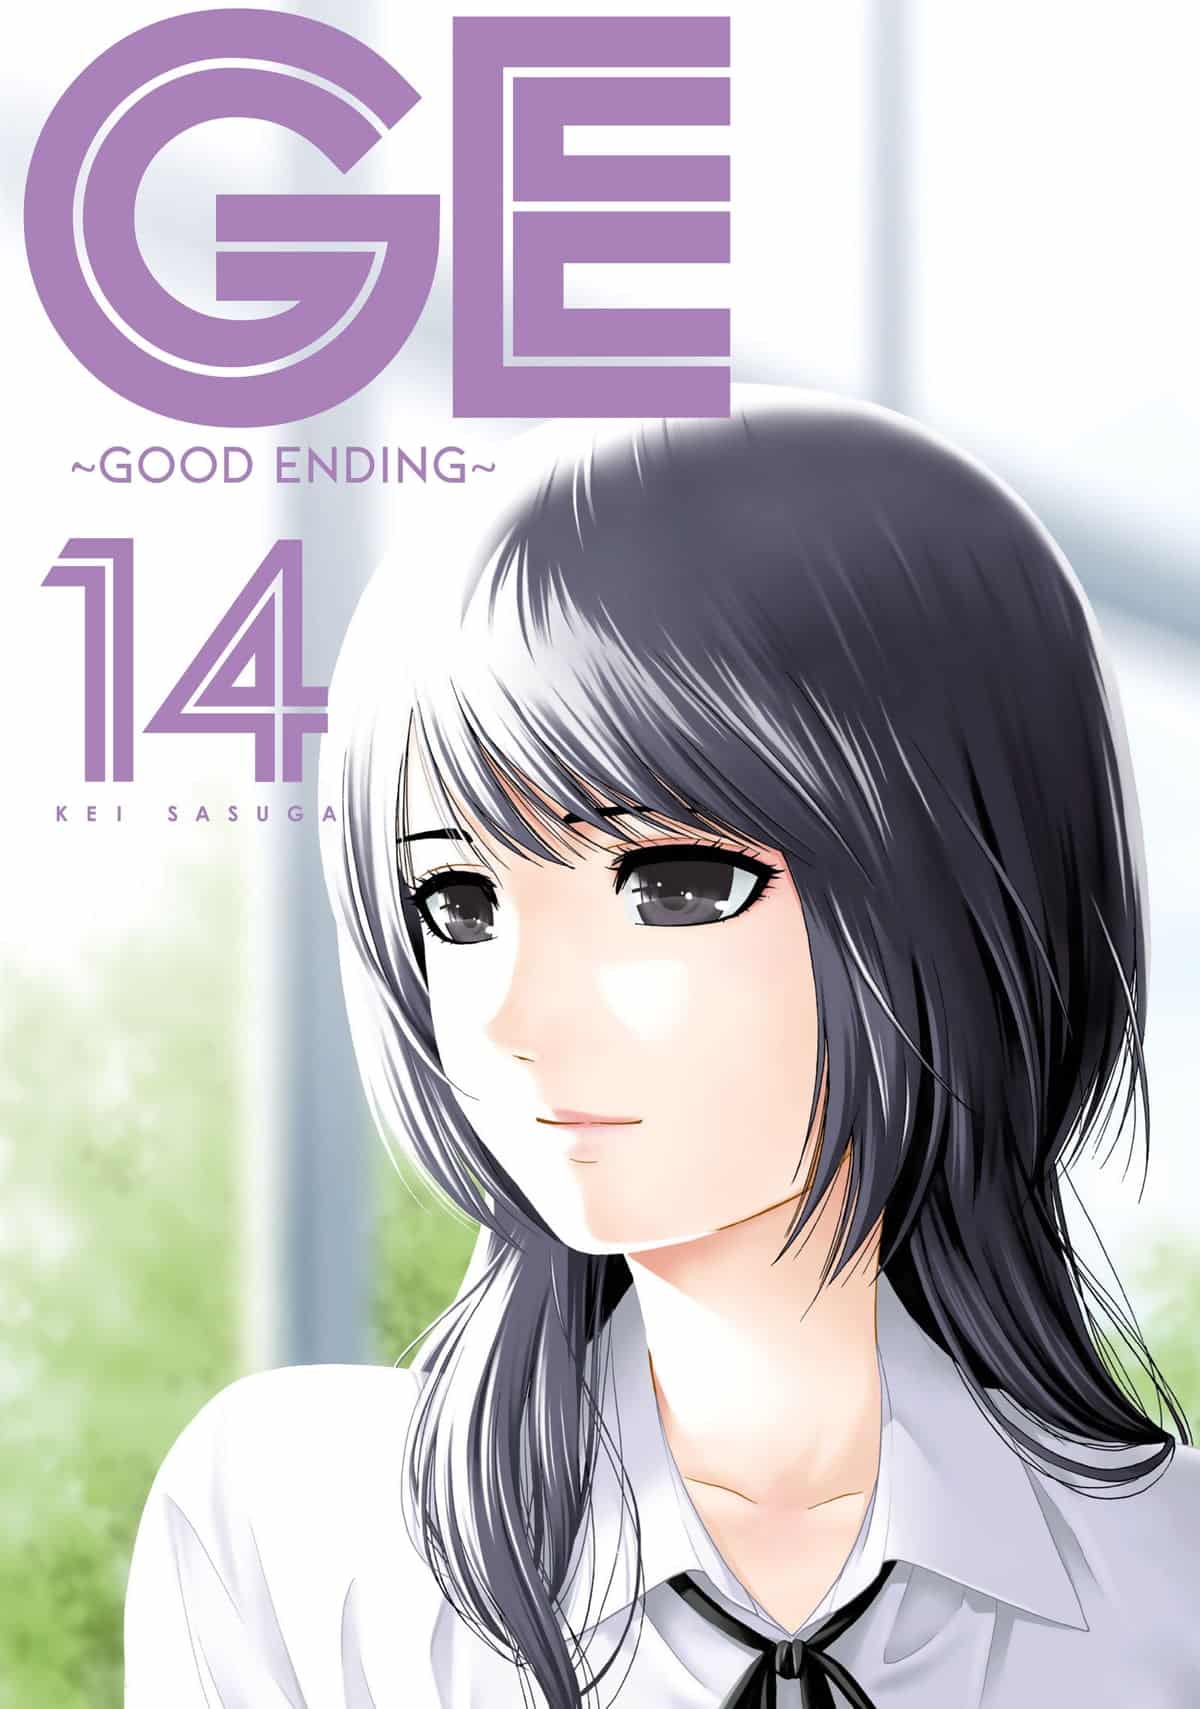 GE: Good Ending